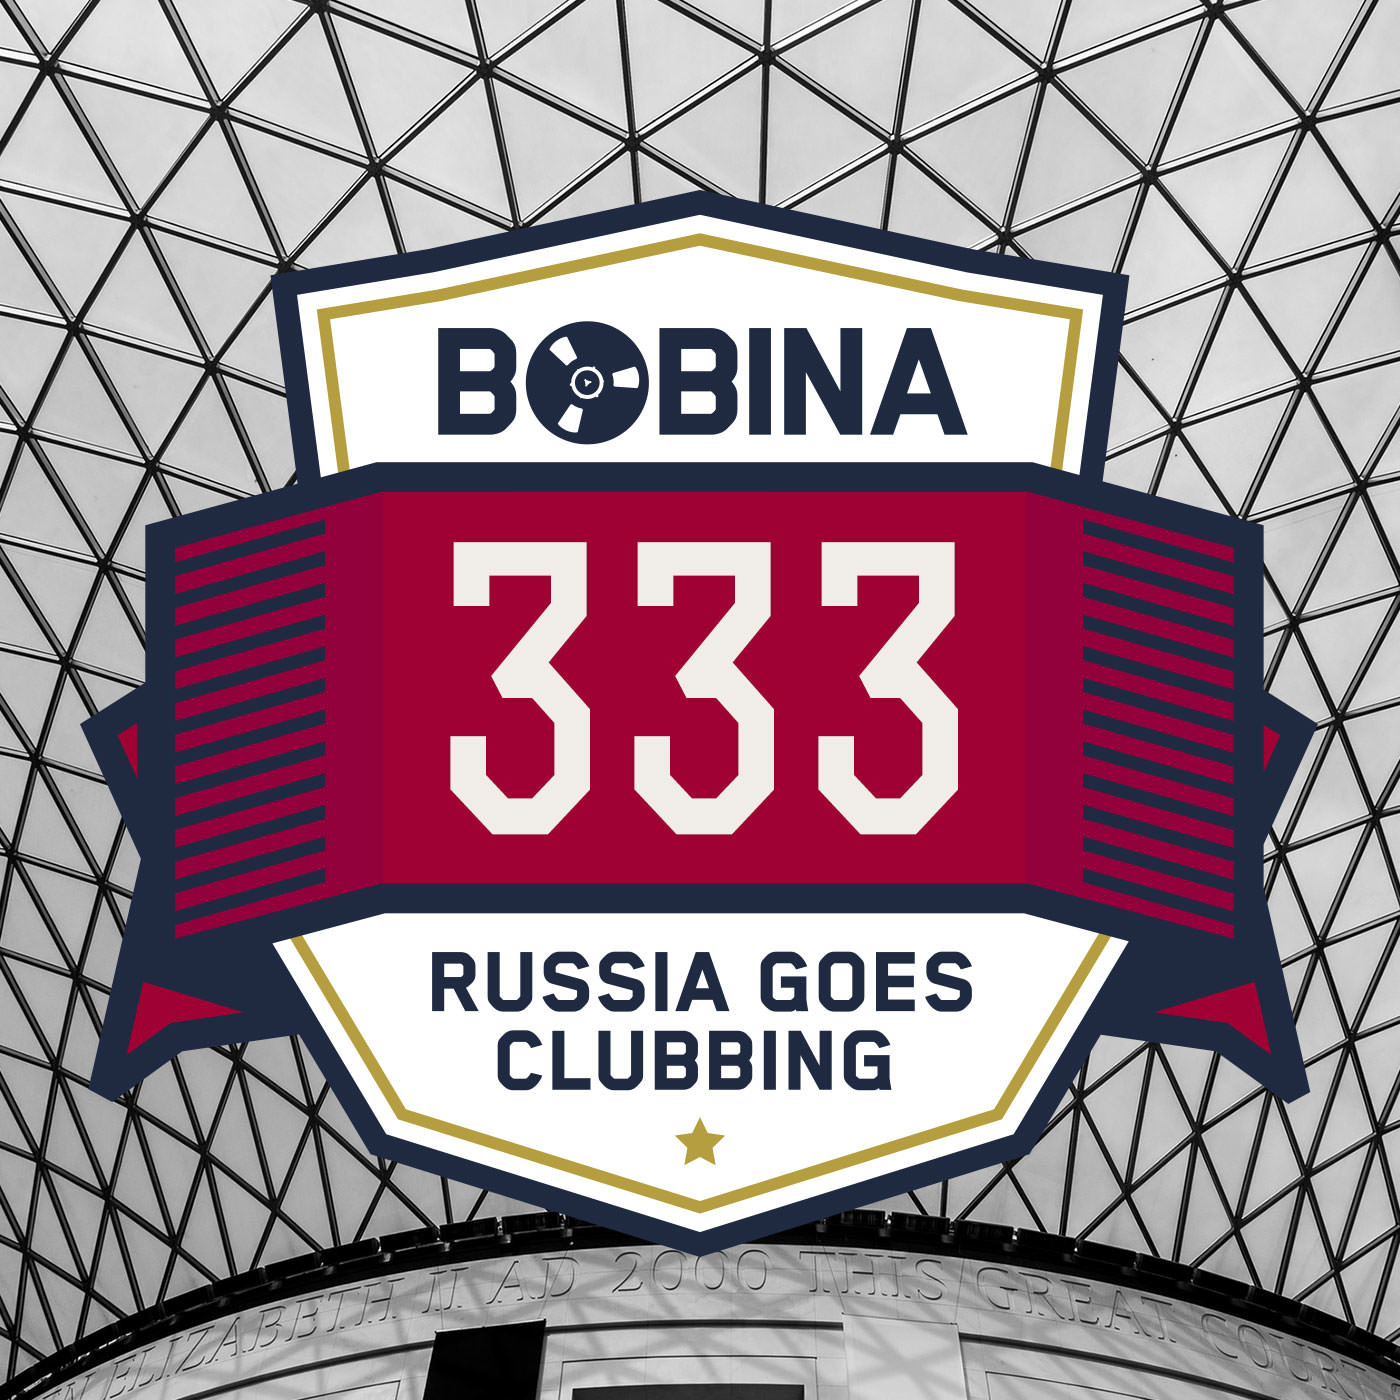 Nr. 333 Russia Goes Clubbing